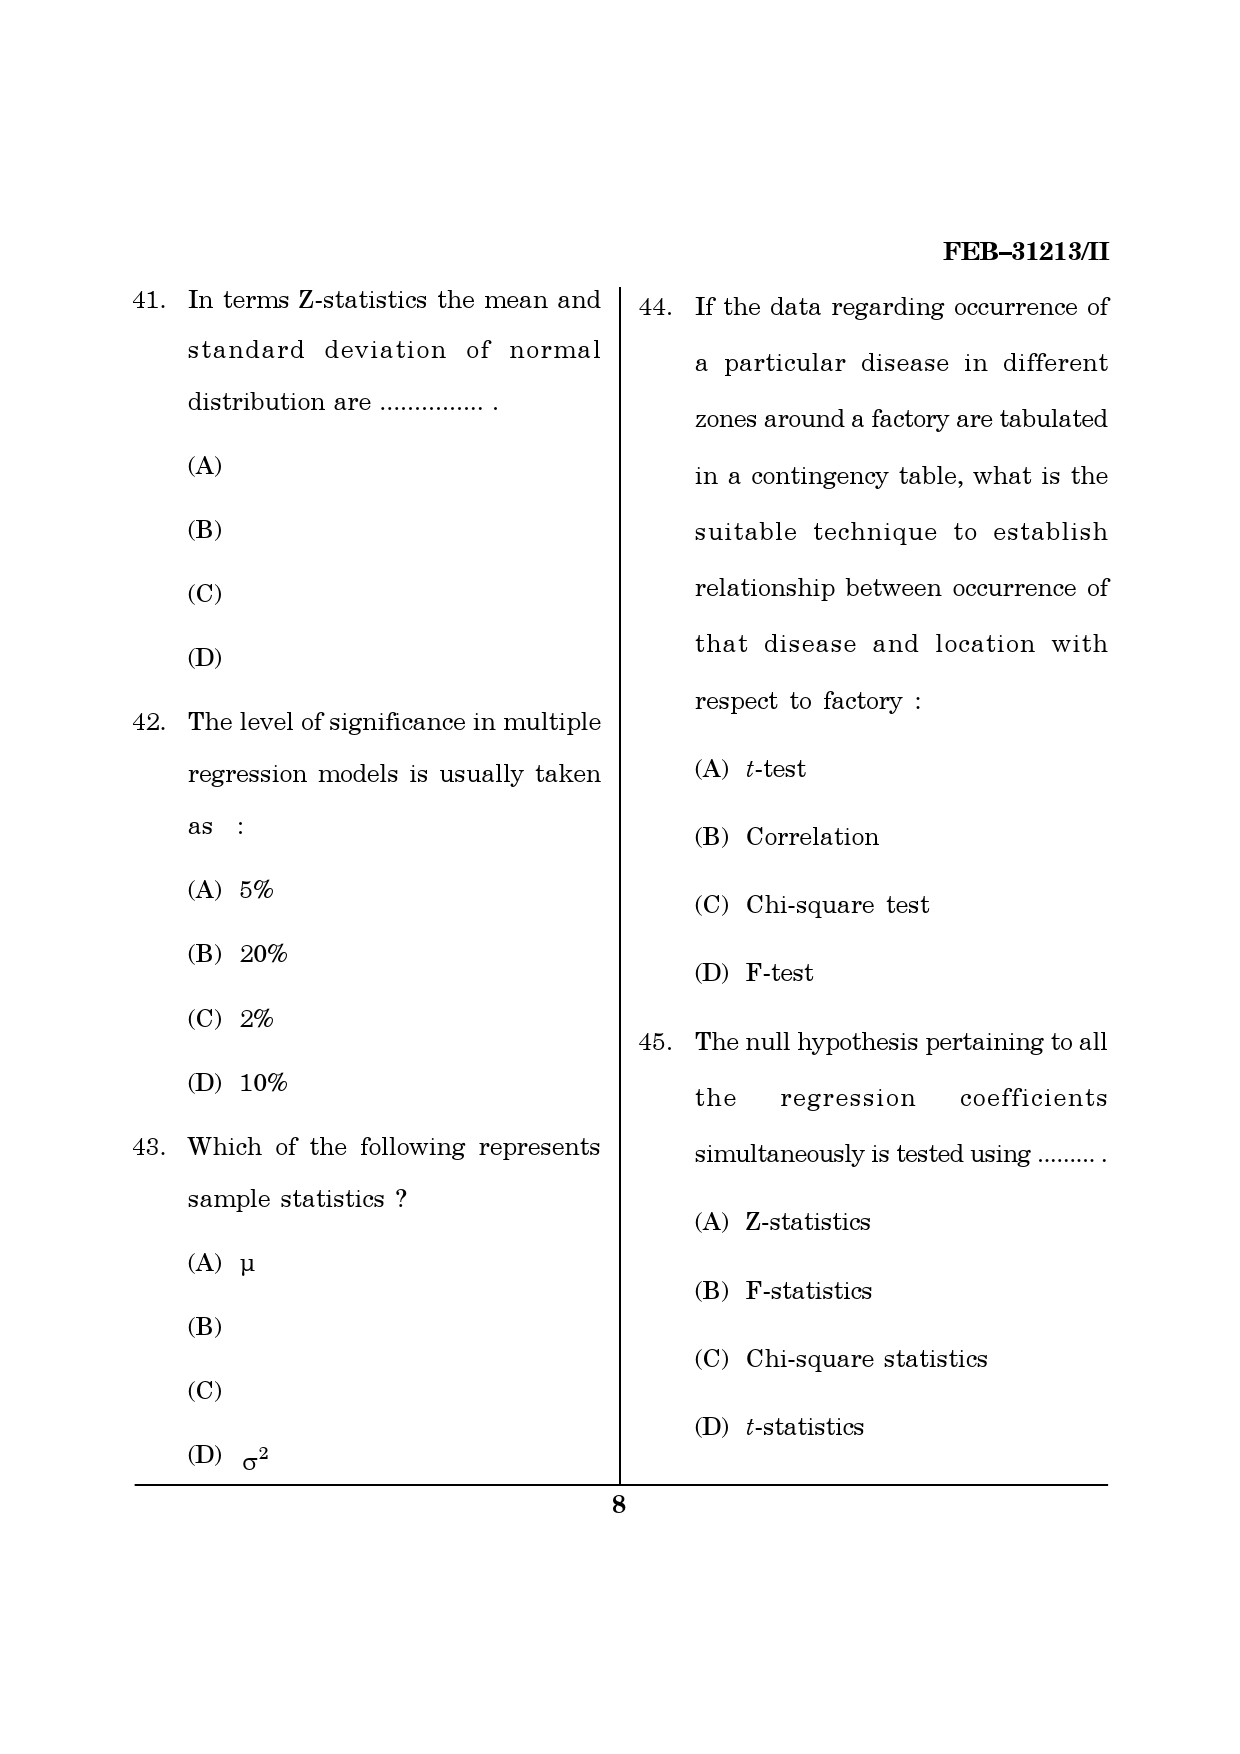 Maharashtra SET Environmental Sciences Question Paper II February 2013 8